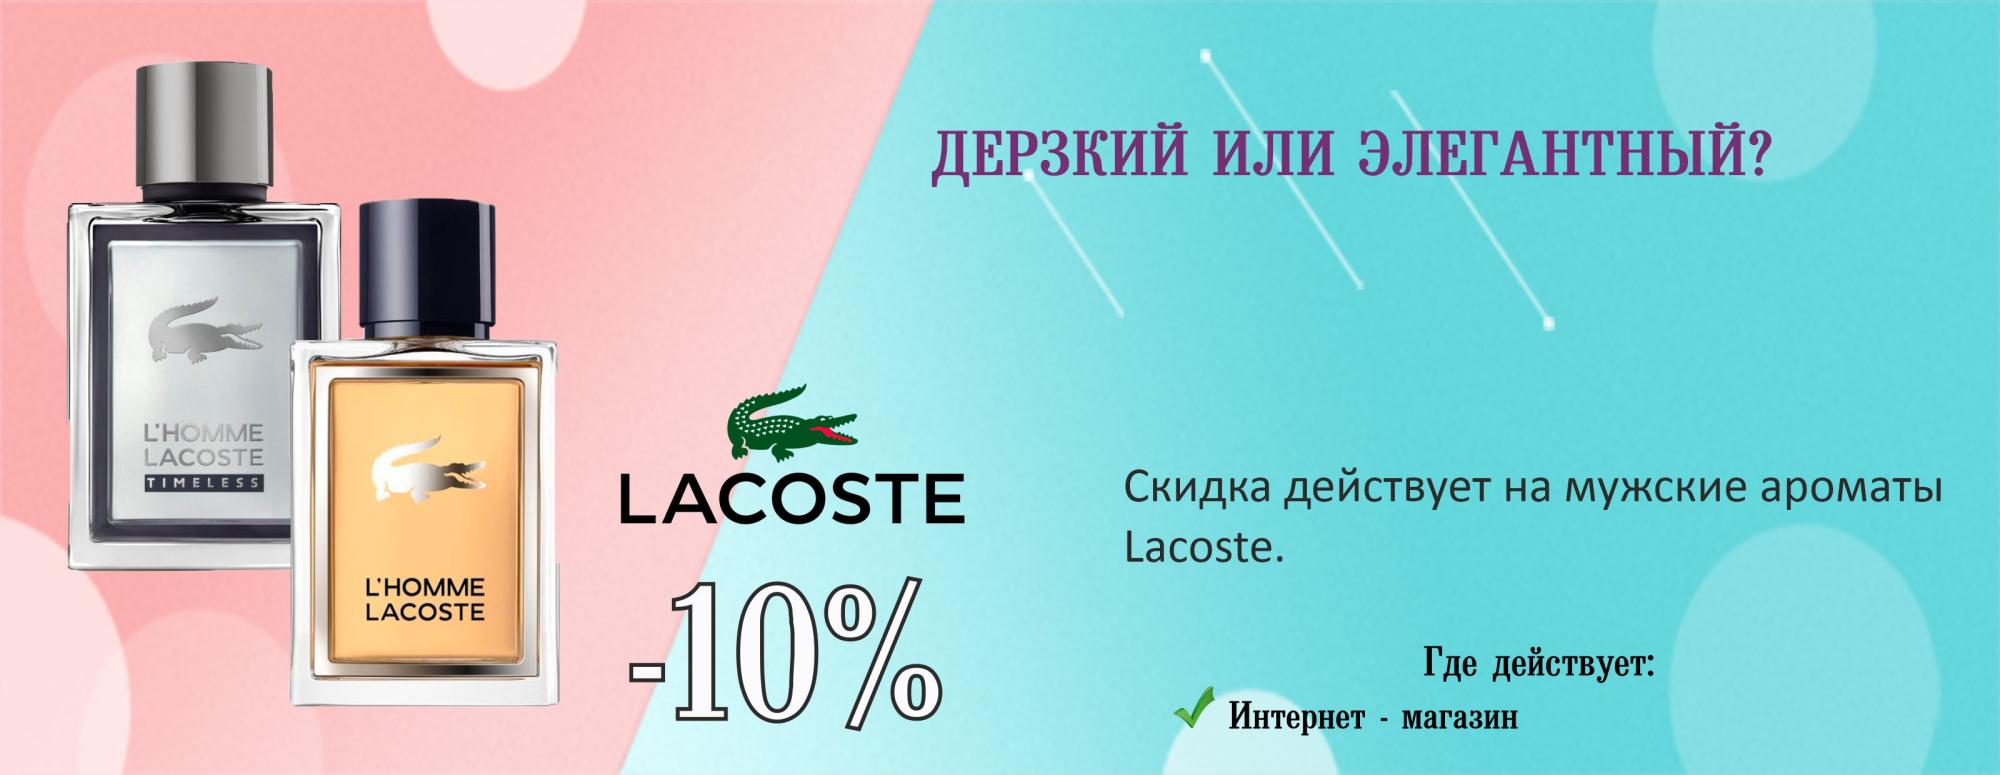 Lacoste - 10%